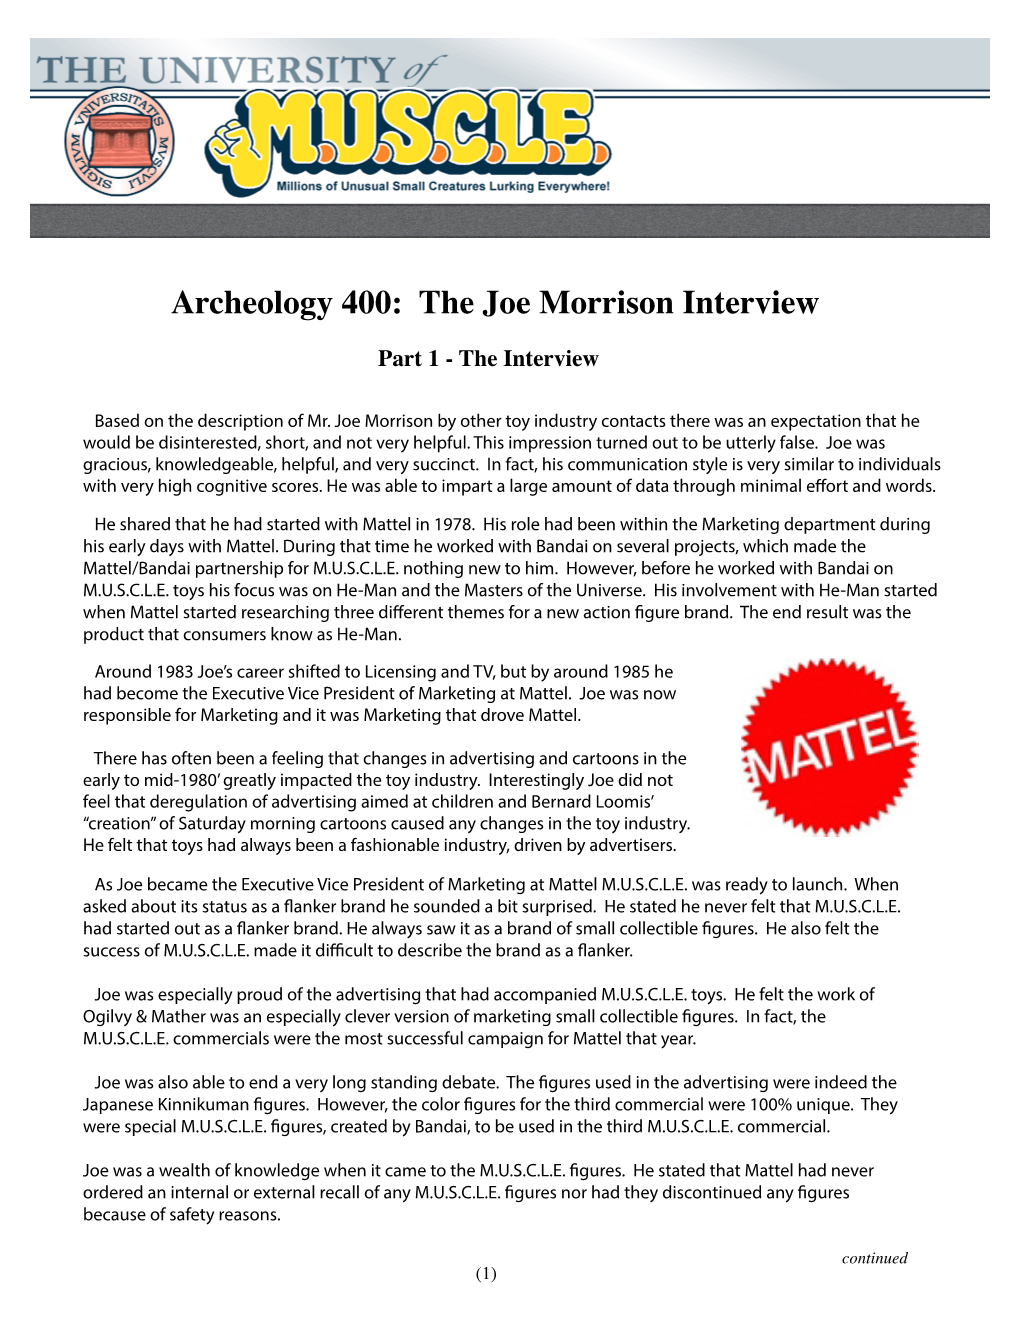 Archeology 400: the Joe Morrison Interview